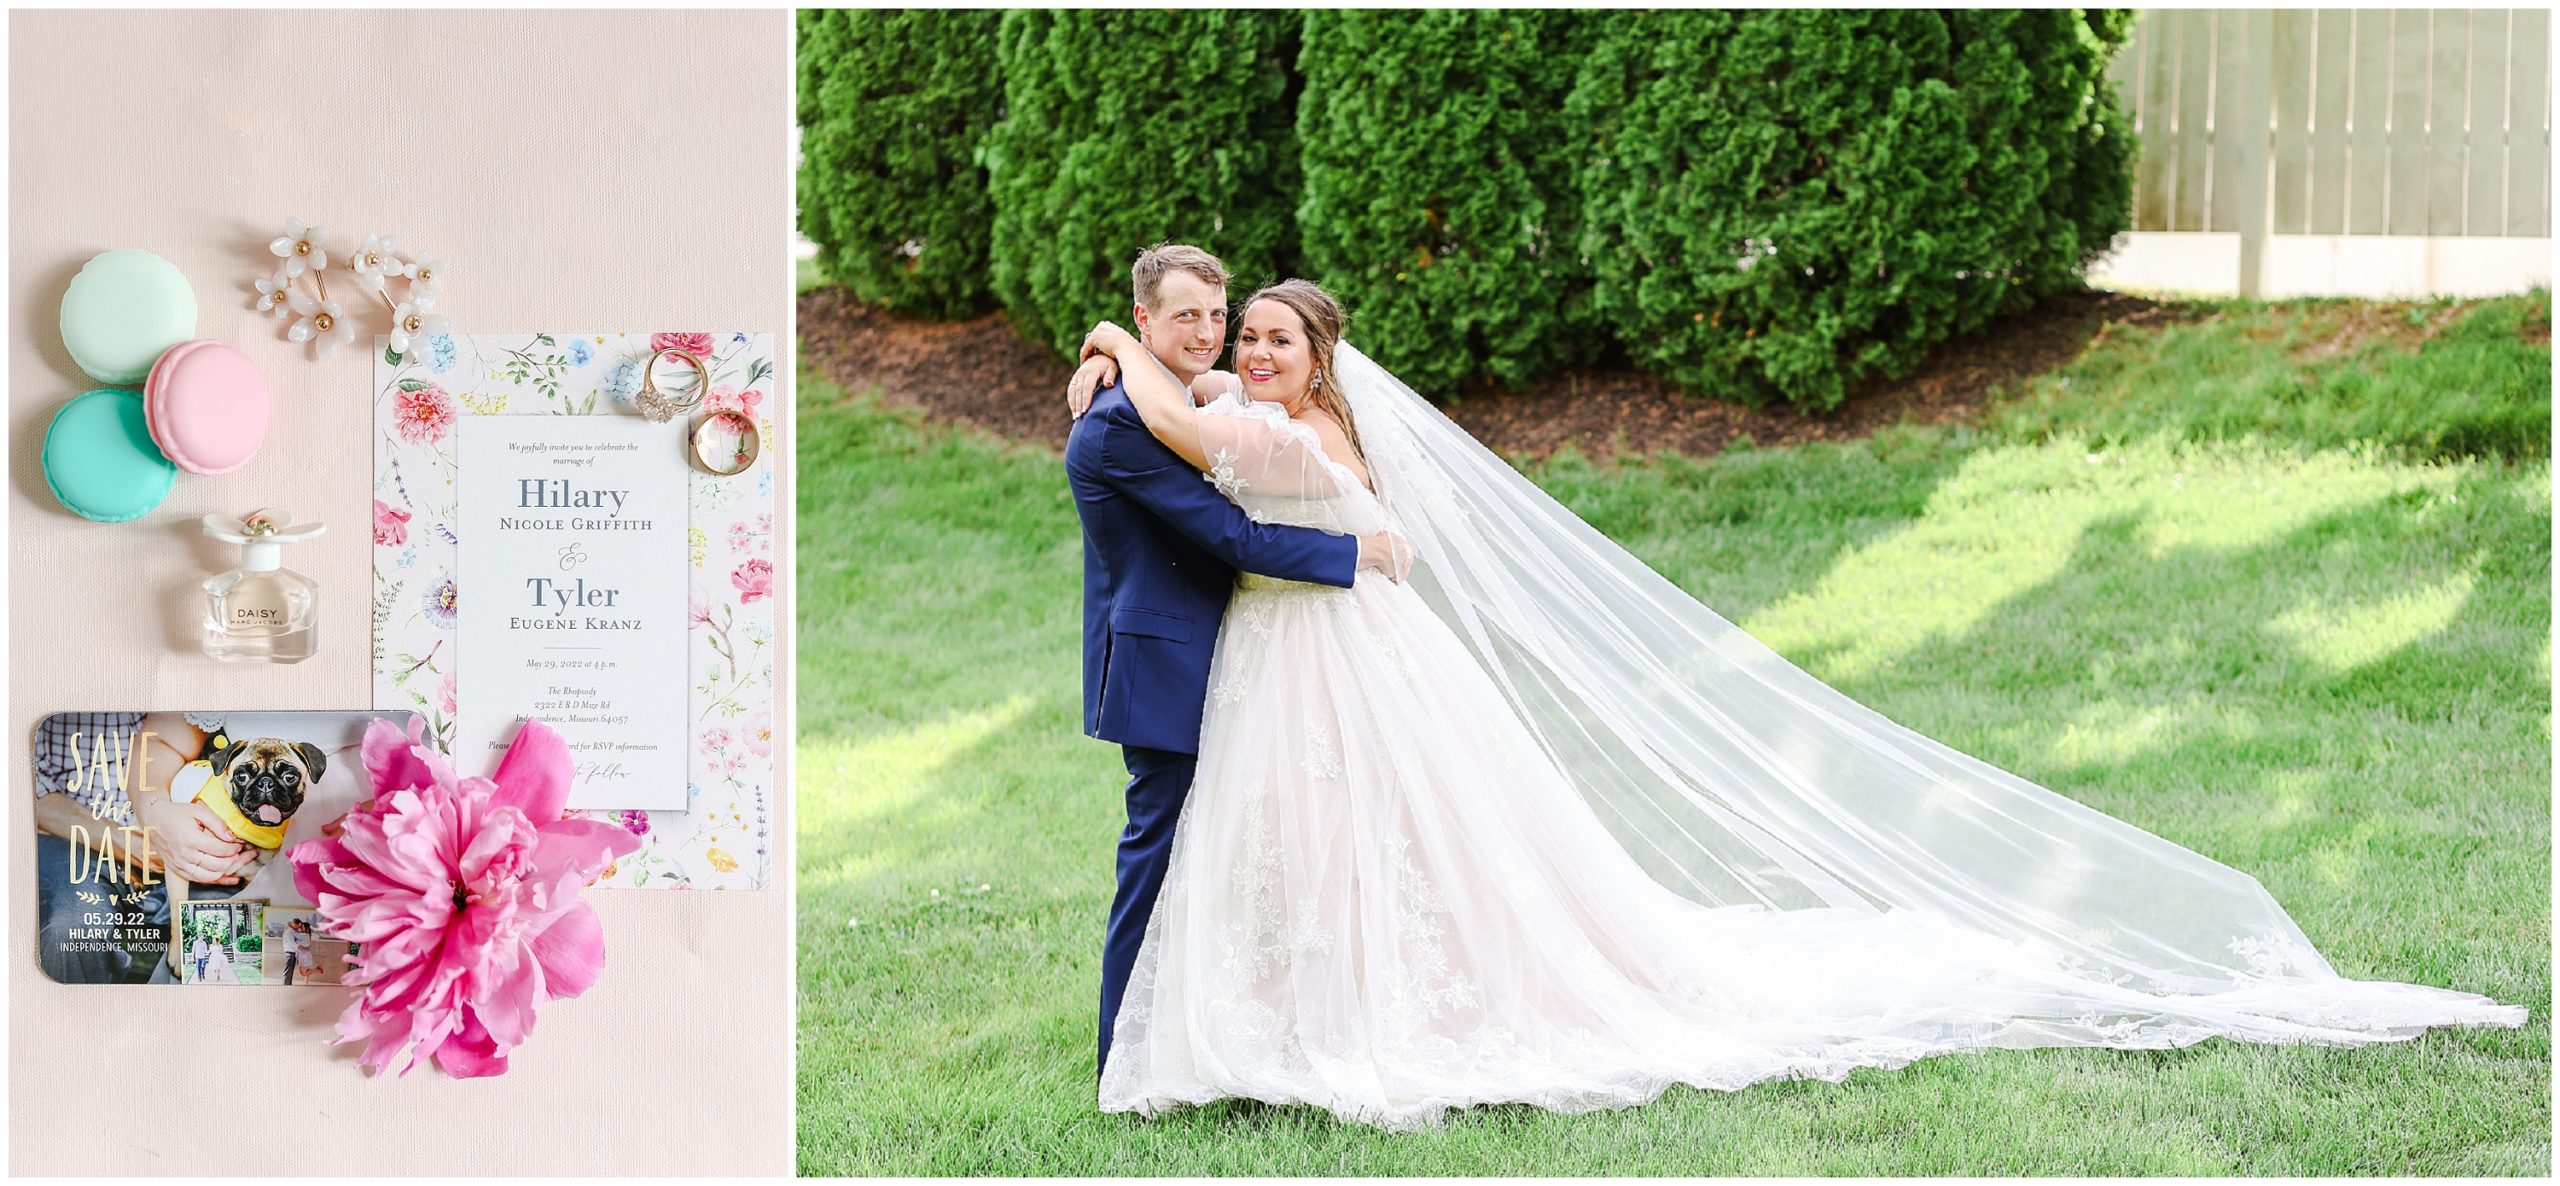 Colorful and Joyful Wedding Photography - Kansas City Wedding Photographer - The Rhapsody - gorgeous colorful wedding flowers - bride and groom photos